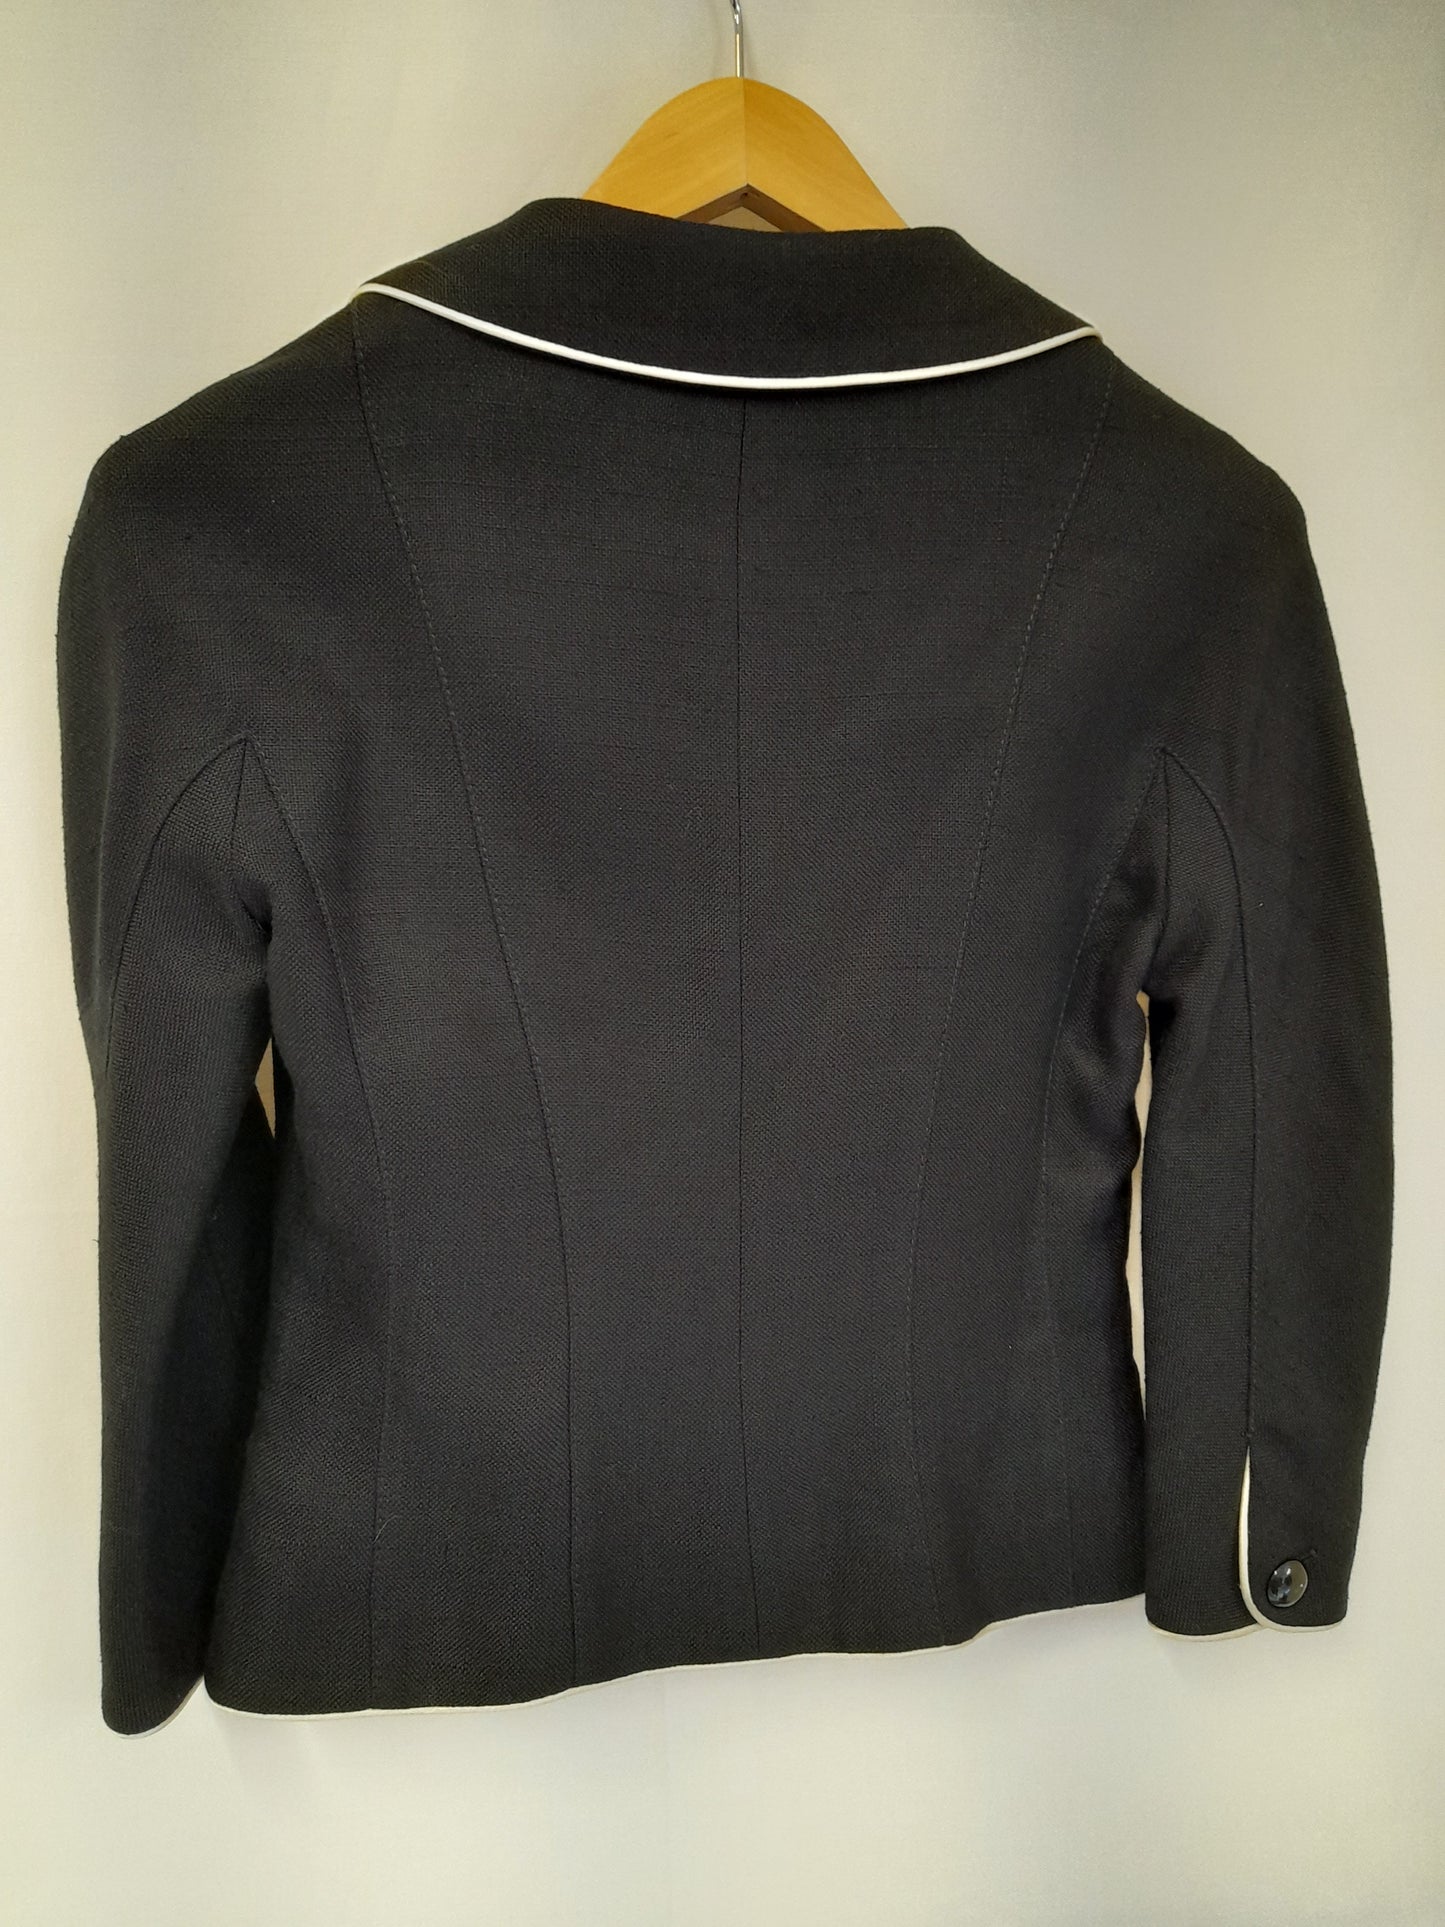 Retro Black Jacket With Cream Detailing & Bows Size 8